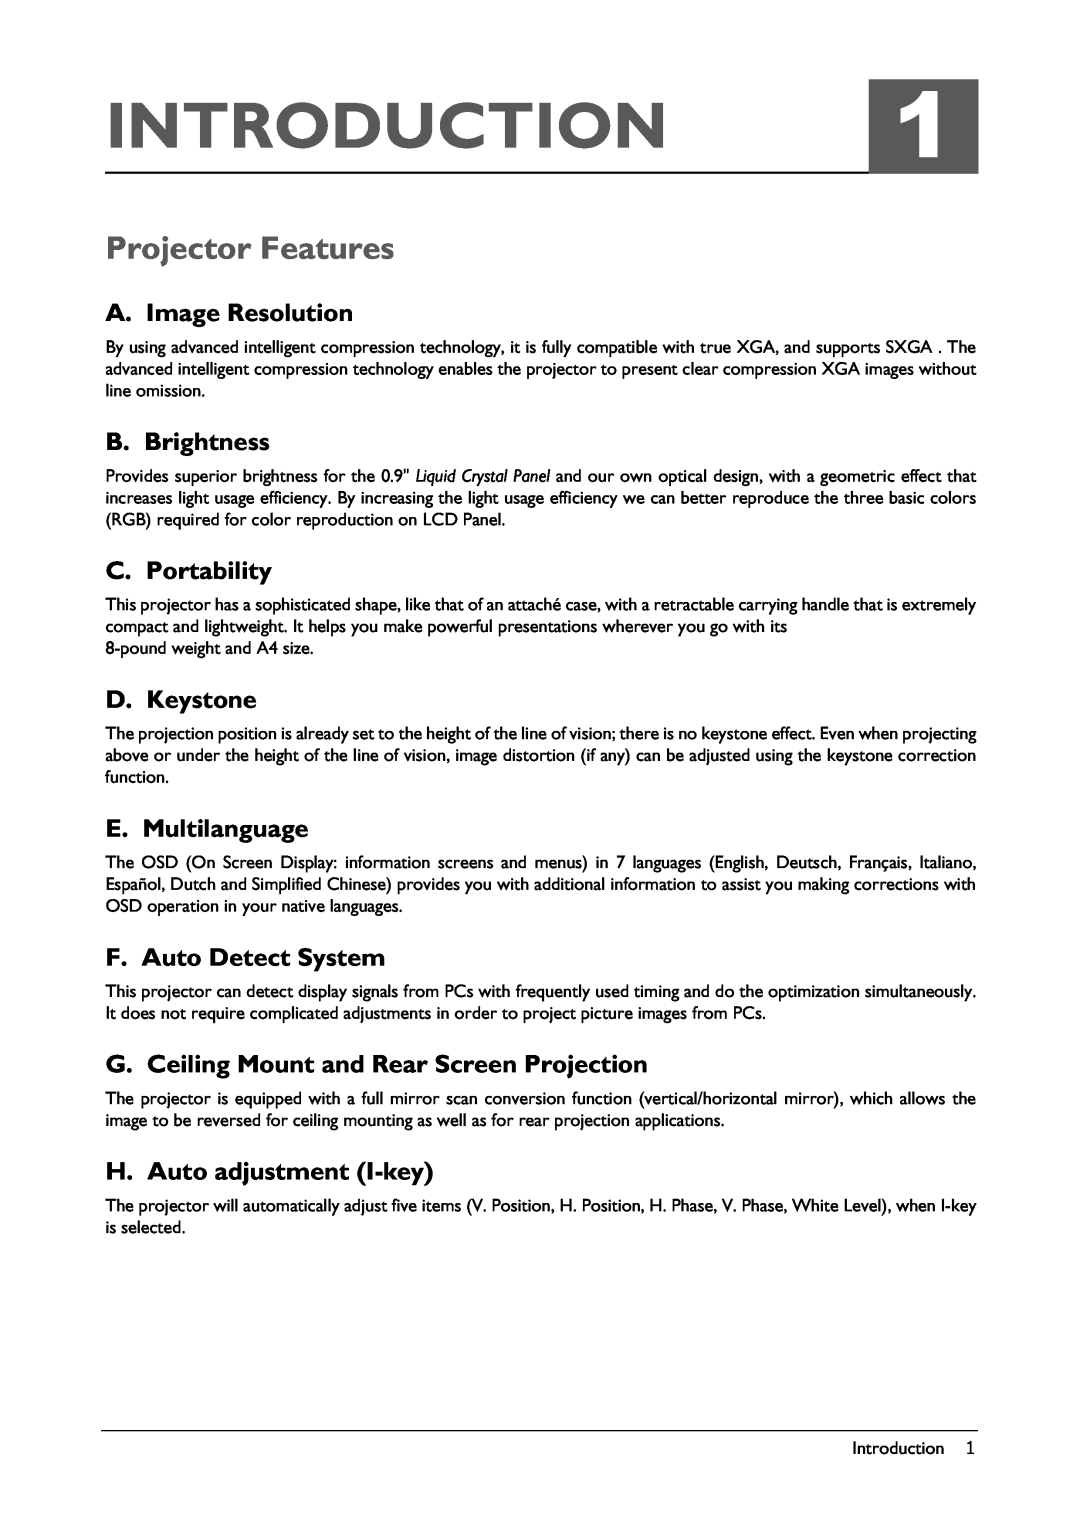 BenQ VP150X manual Introduction, Projector Features, A. Image Resolution, B. Brightness, C. Portability, D. Keystone 